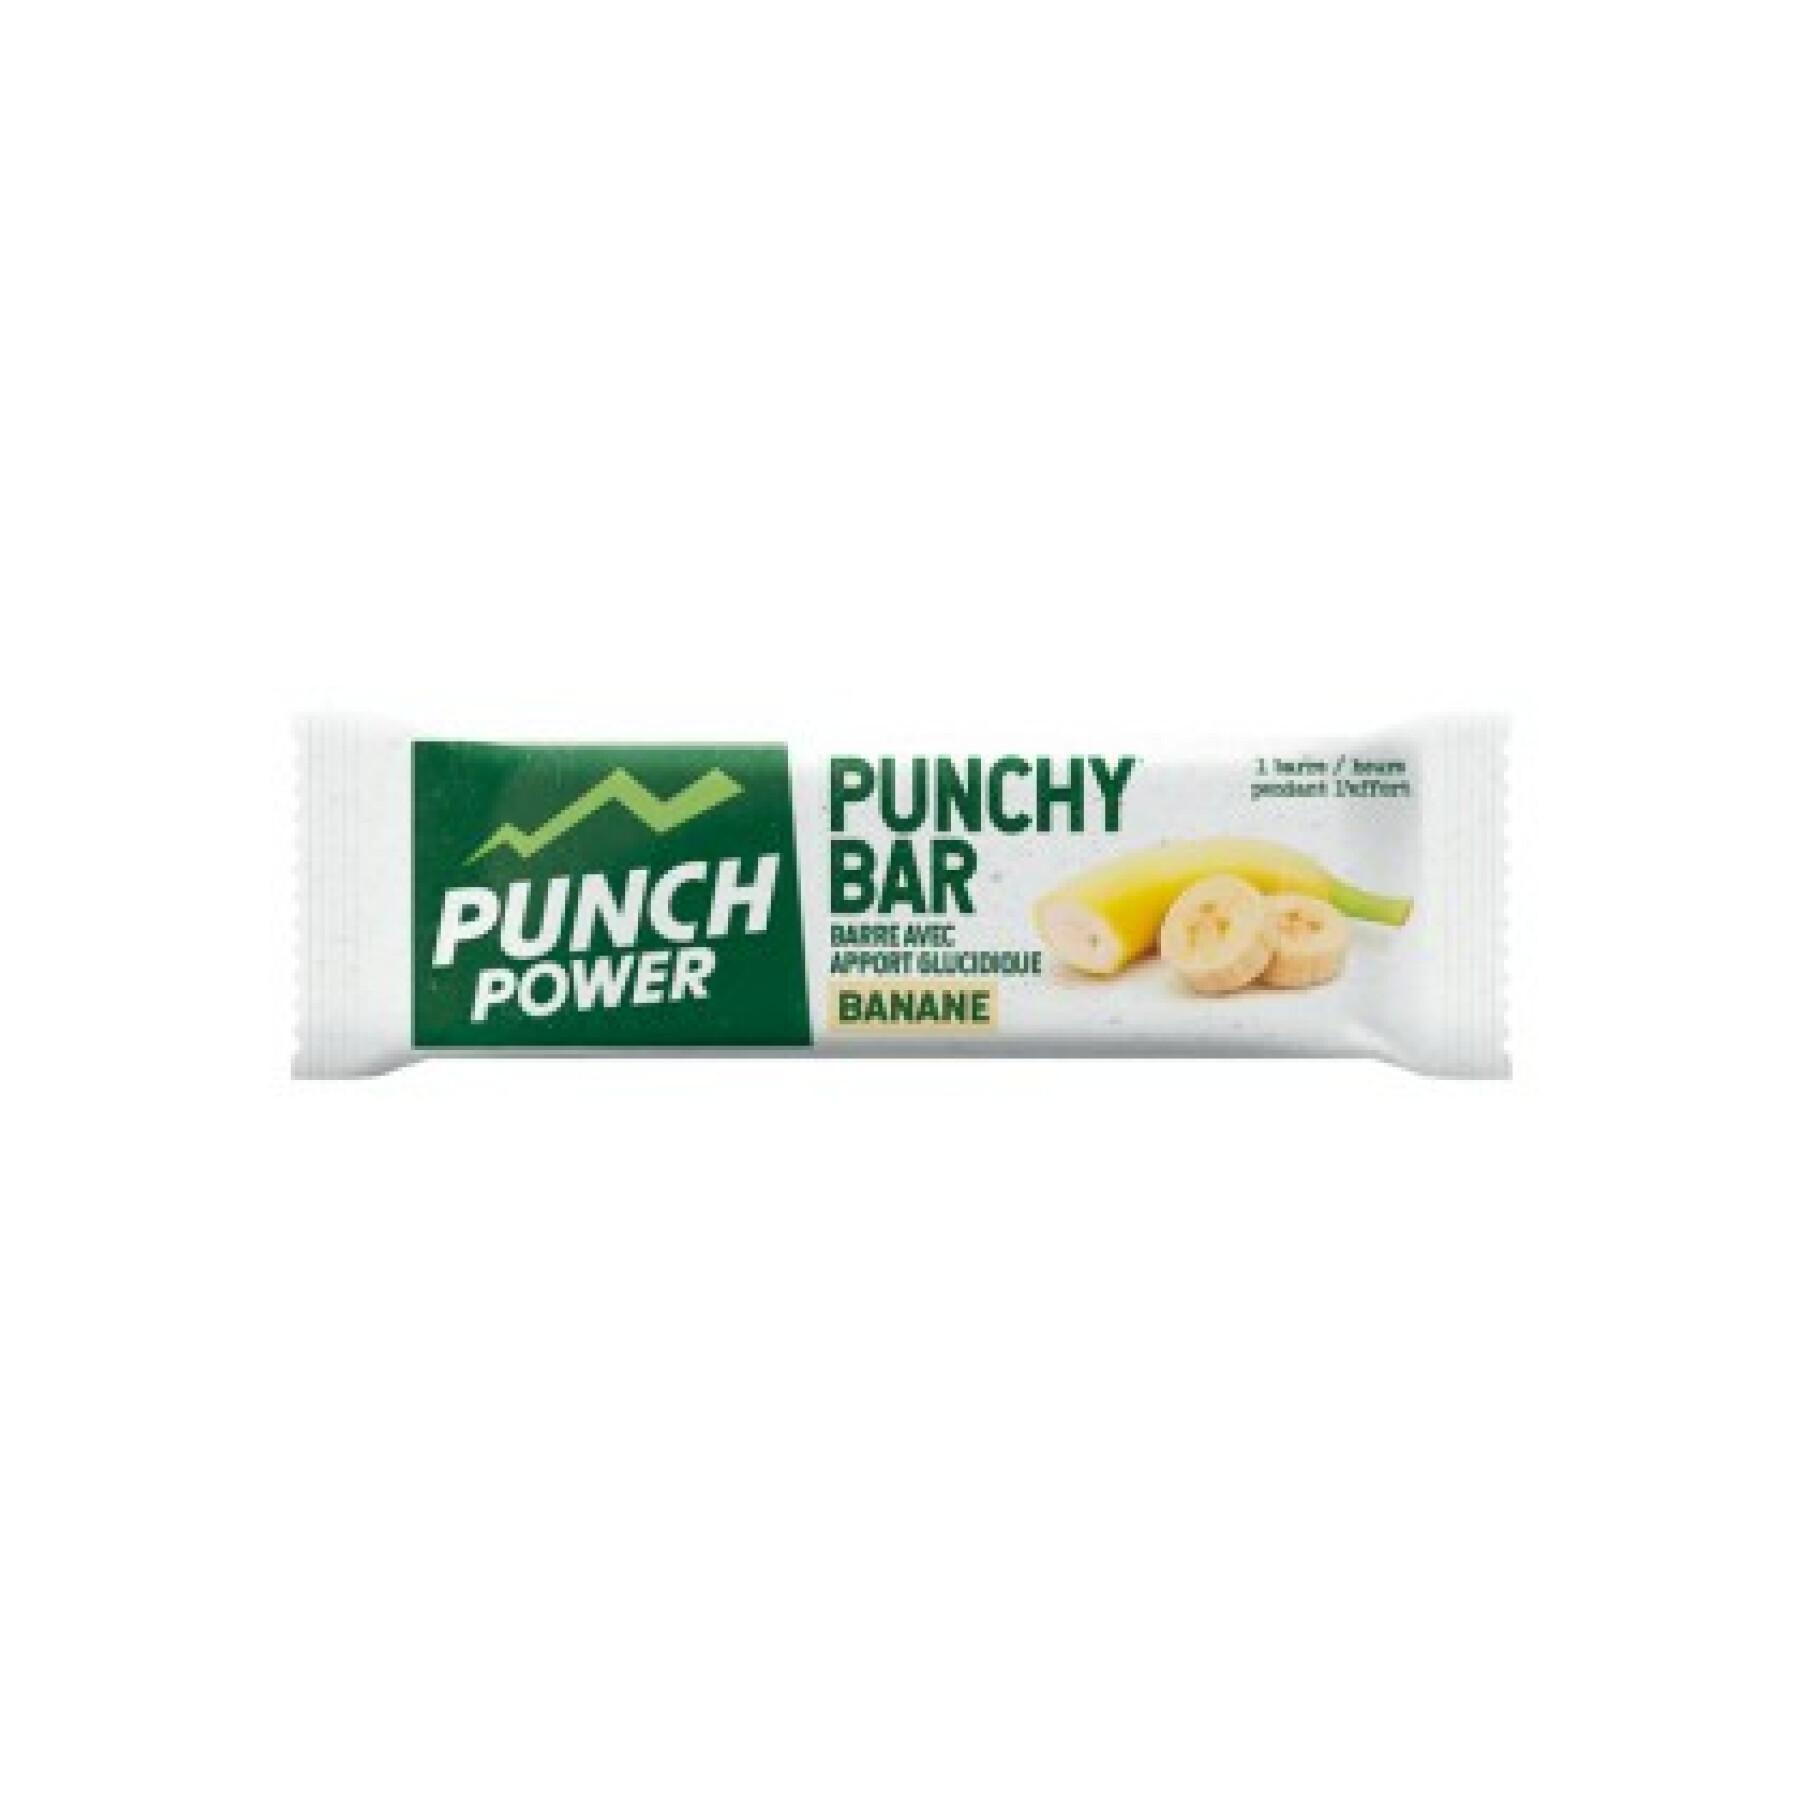 Display 40 energy bars Punch Power Punchybar Banane